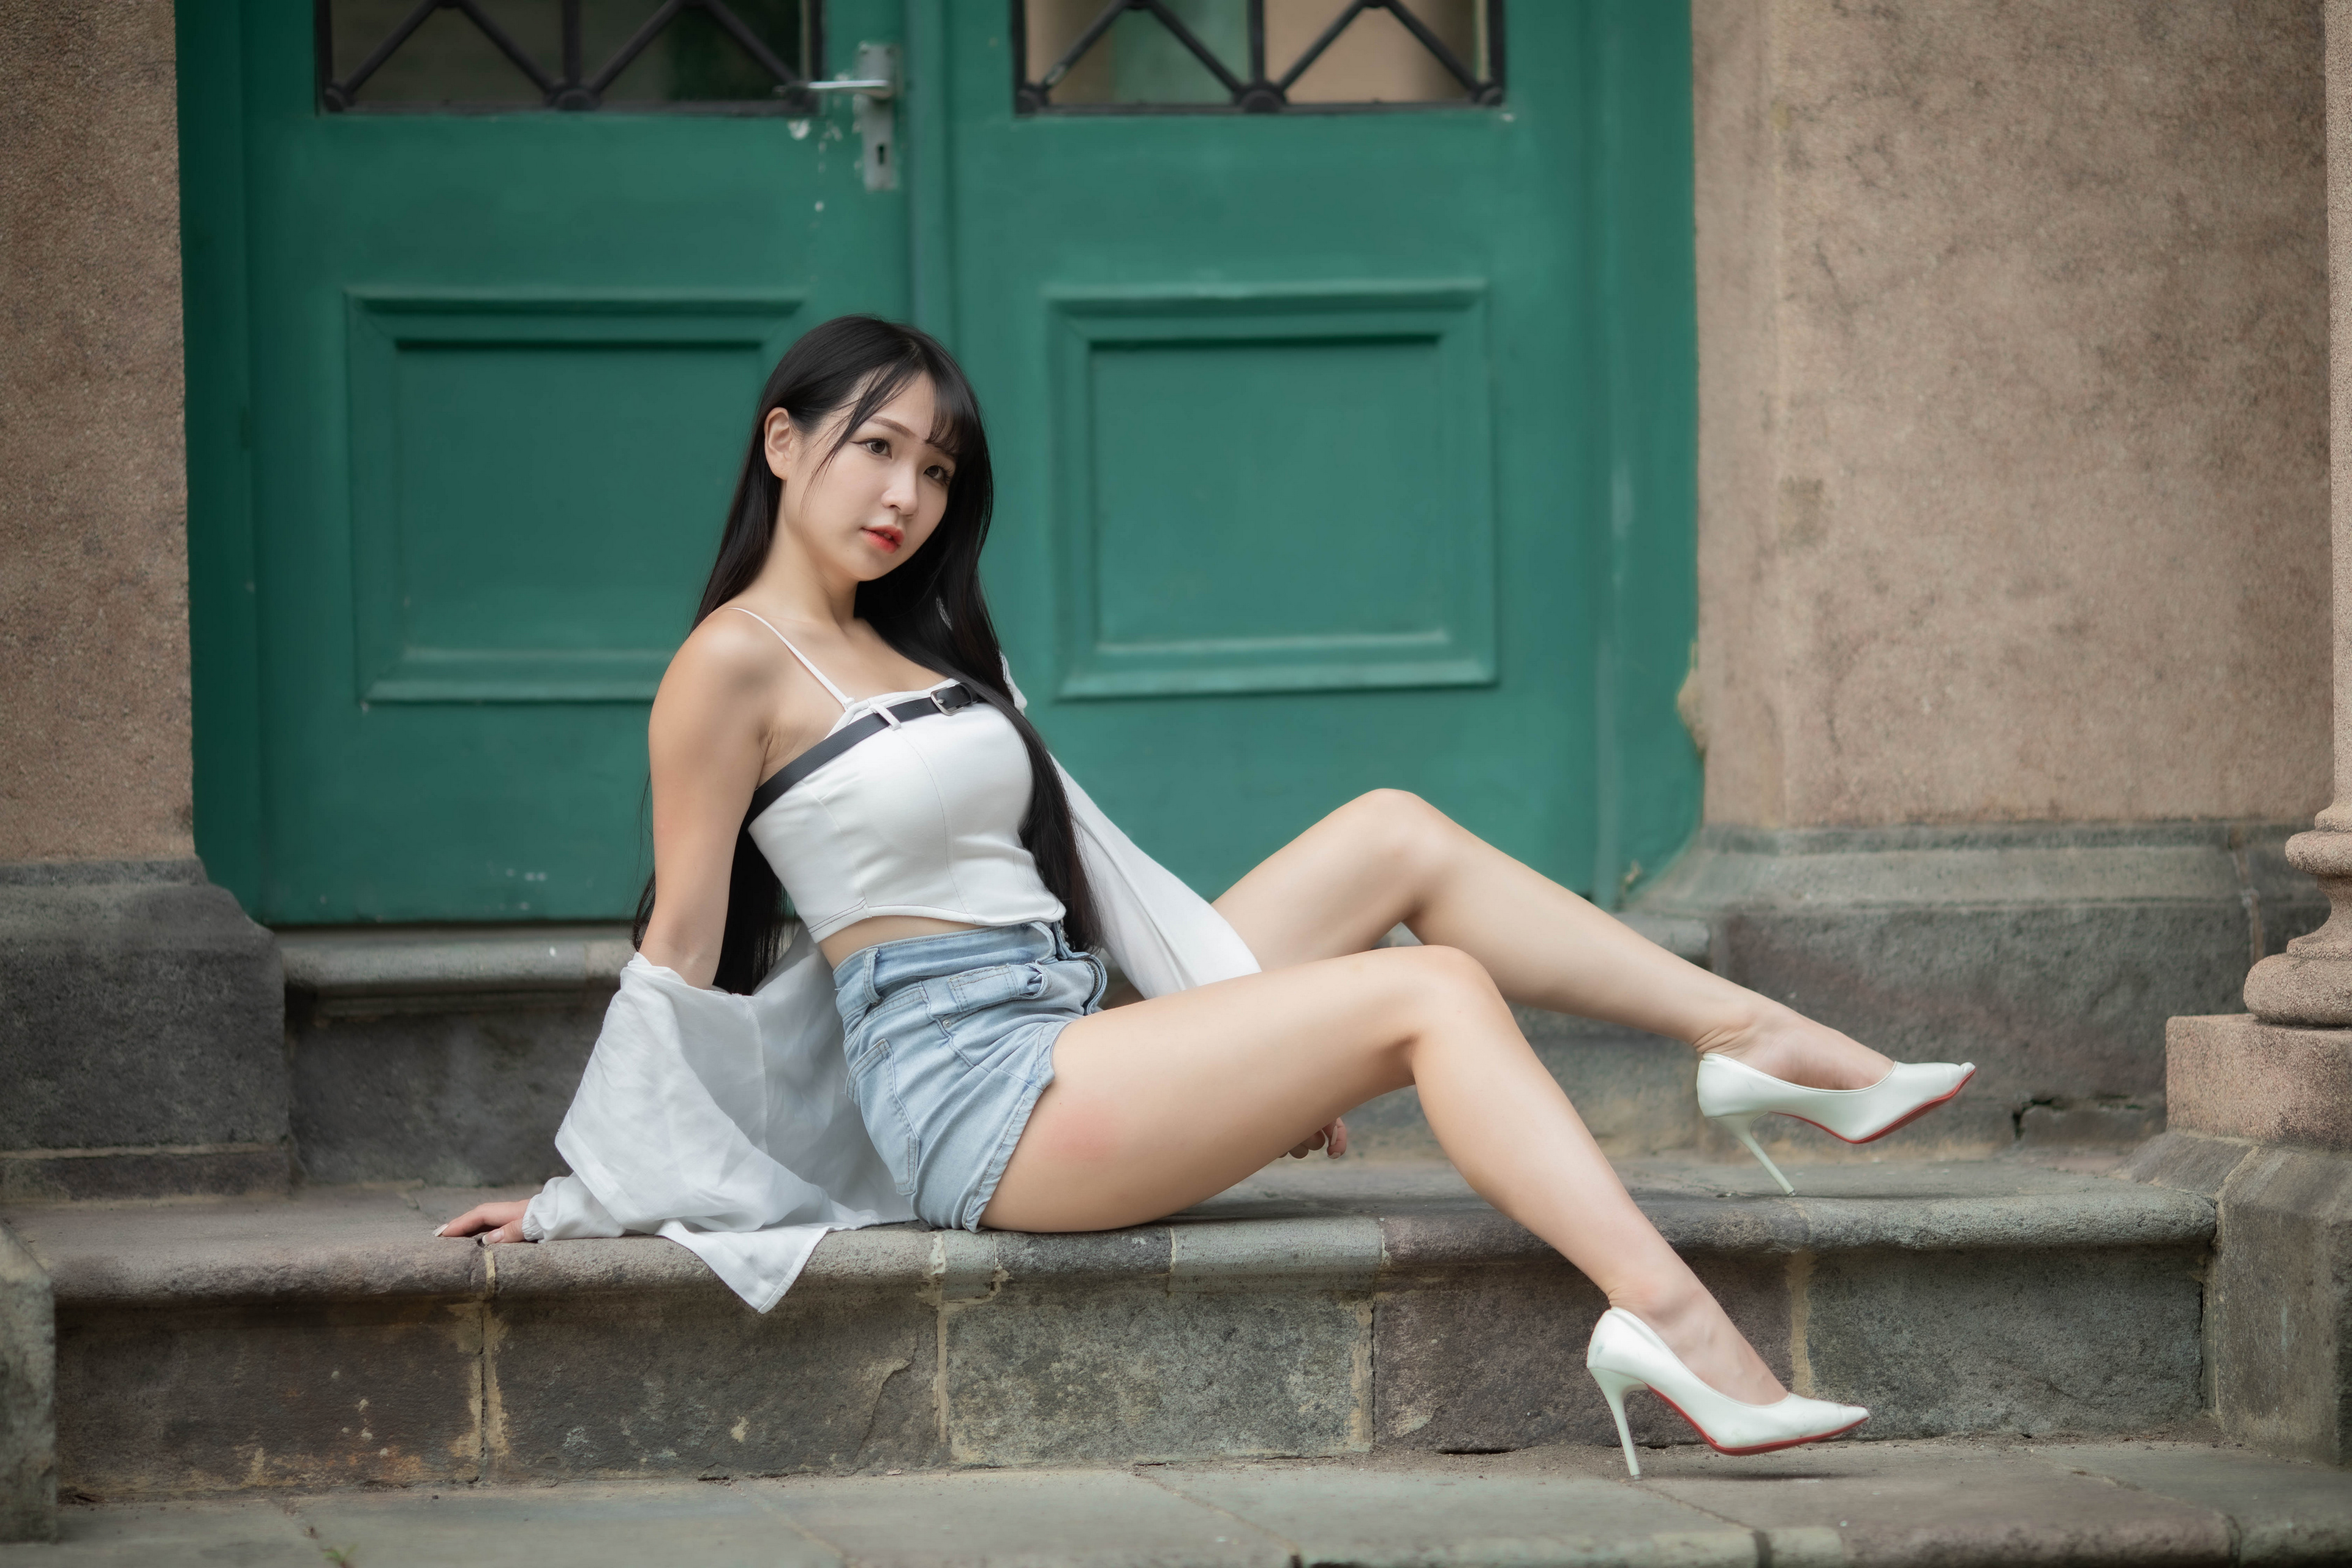 Asian Model Women Long Hair Dark Hair Sitting 3840x2560